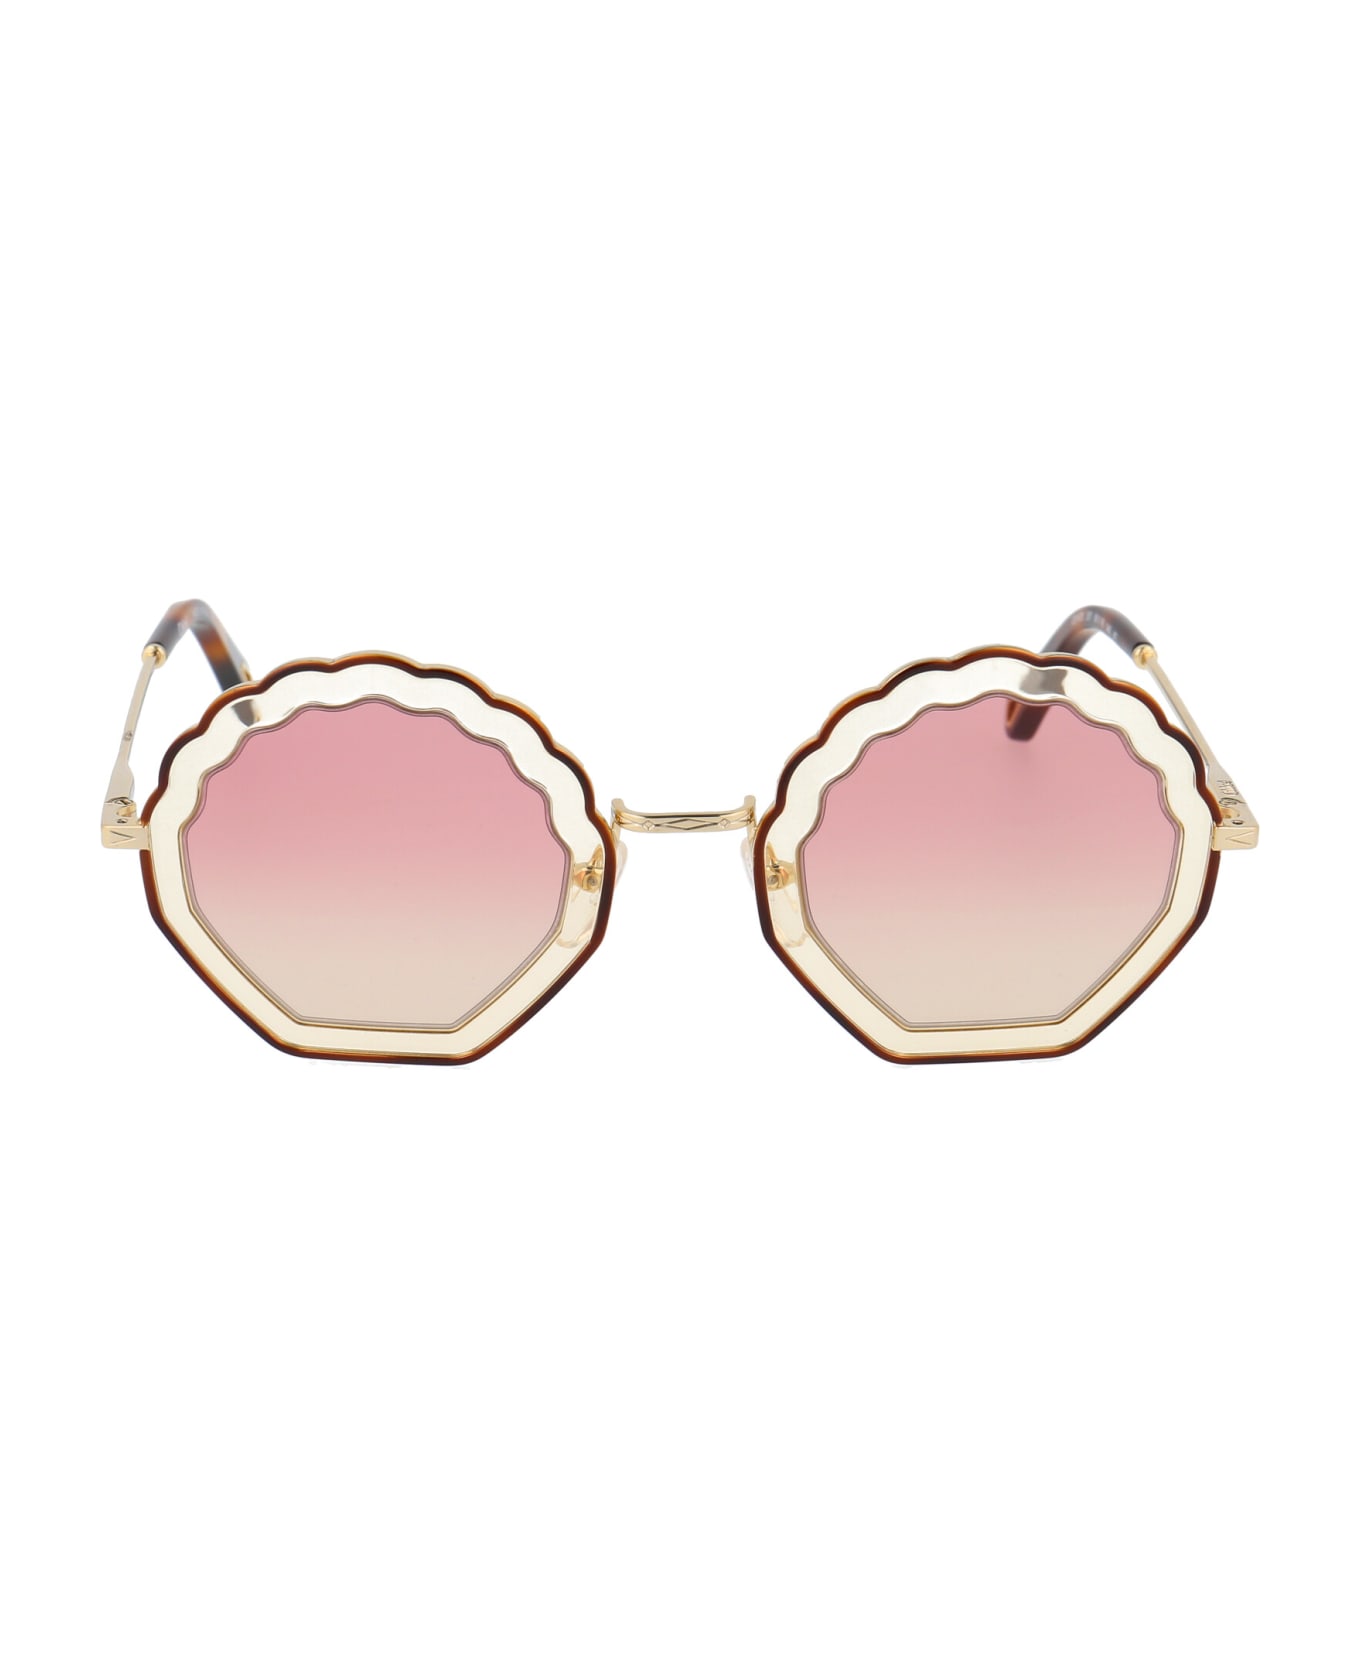 Chloé Eyewear Ce147s Sunglasses - 257 HAVANA SAND/GRADIENT PINK サングラス